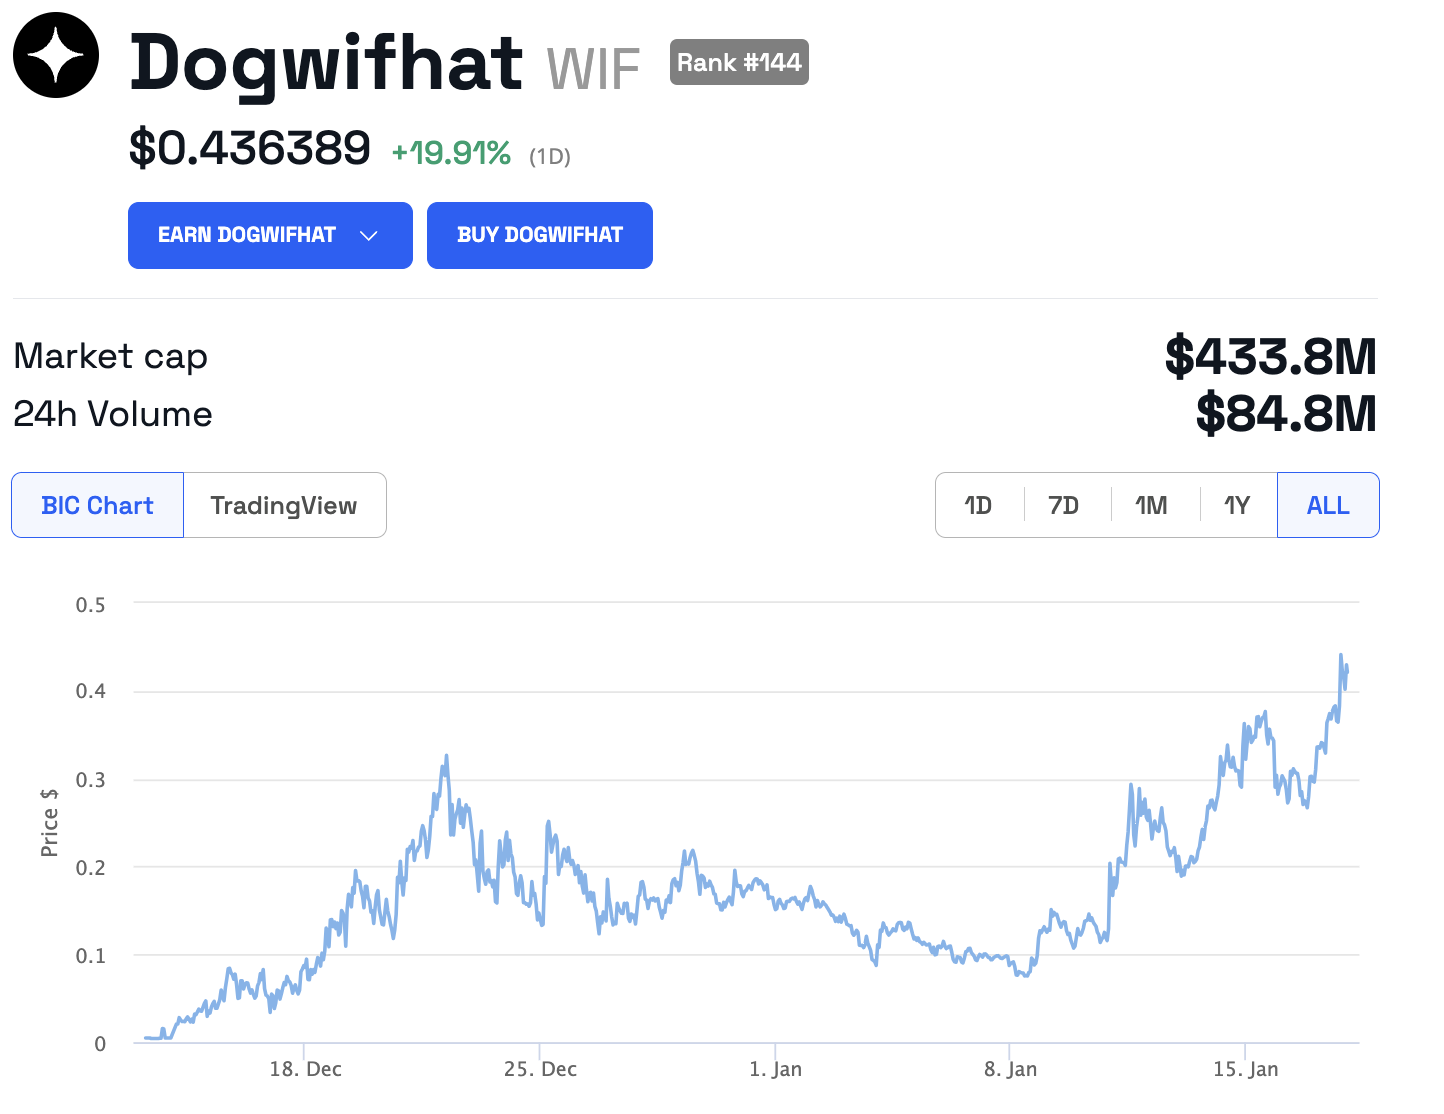 Цена мем-токена Dogwifhat достигла исторического максимума